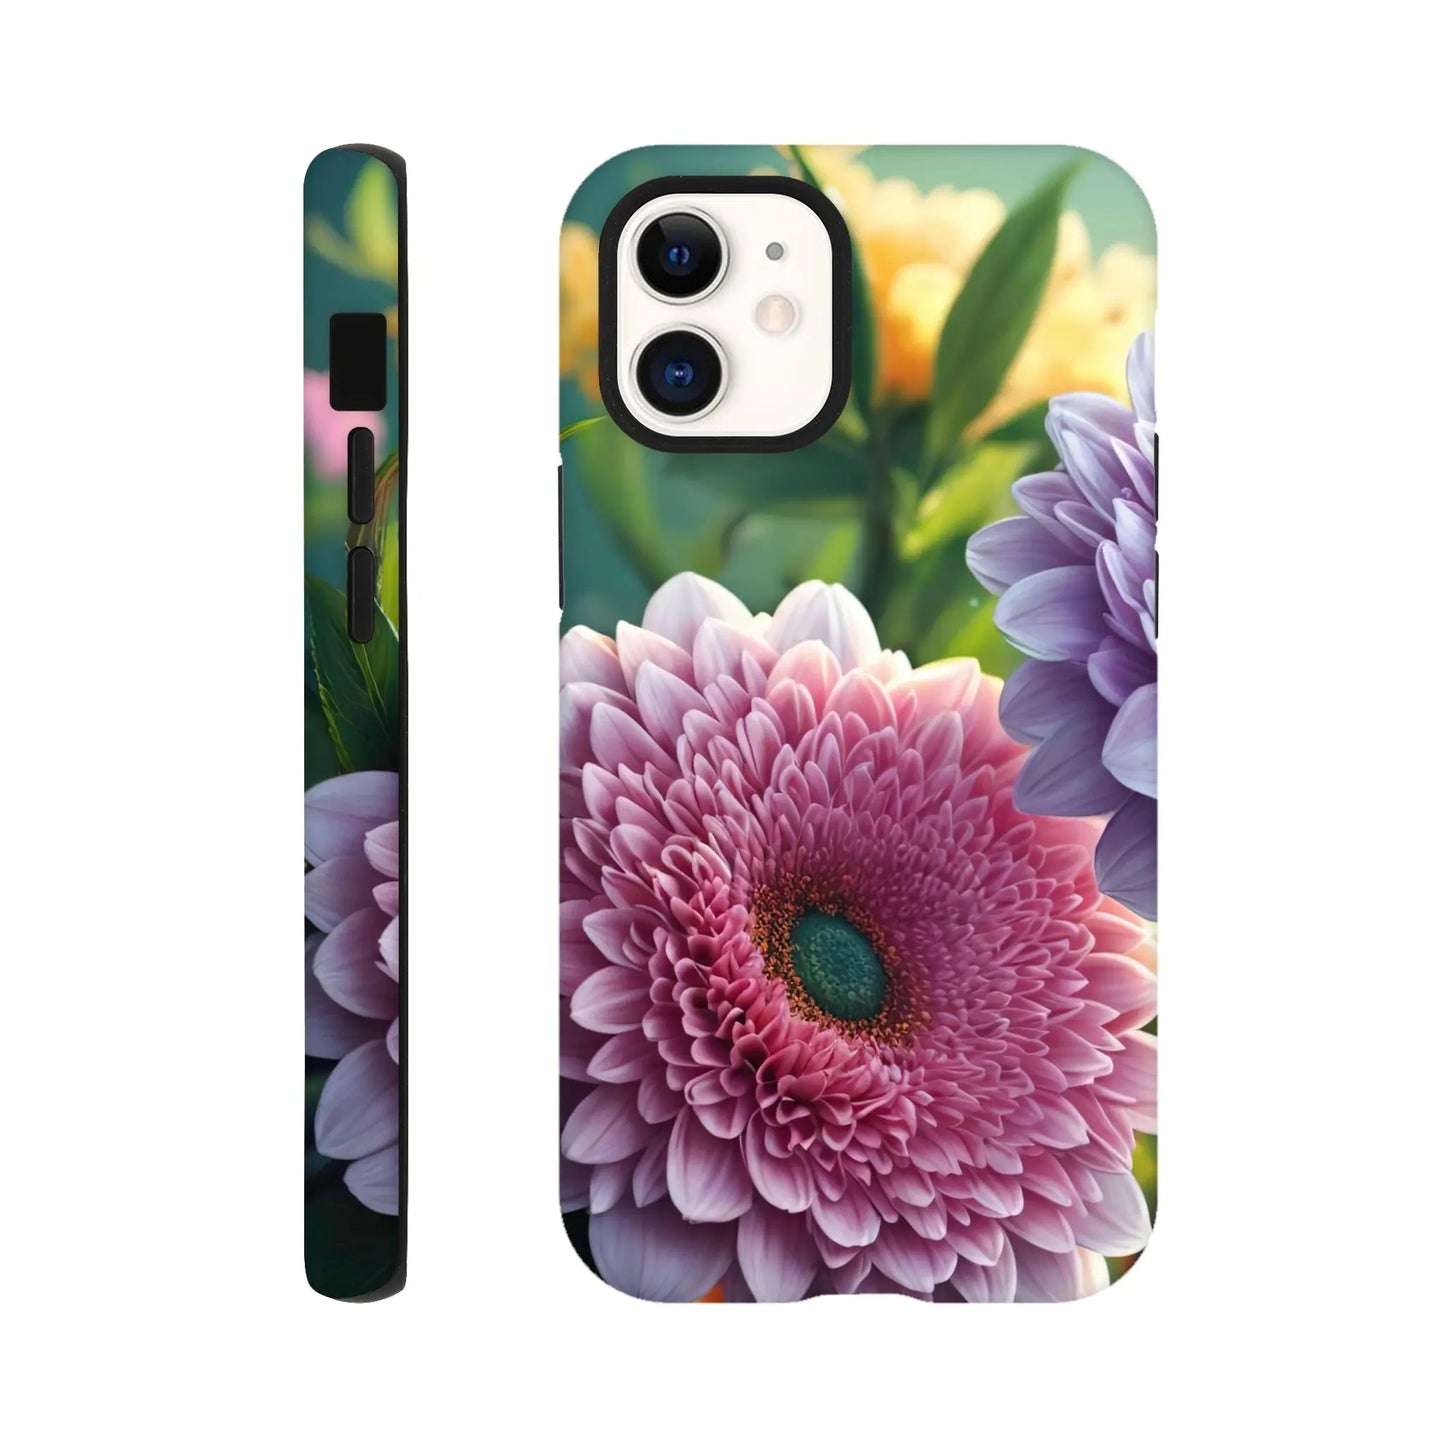 Smartphone-Hülle "Hart" - Blumen Vielfalt - Foto Stil, KI-Kunst, Pflanzen, iPhone-12-Mini - RolConArt